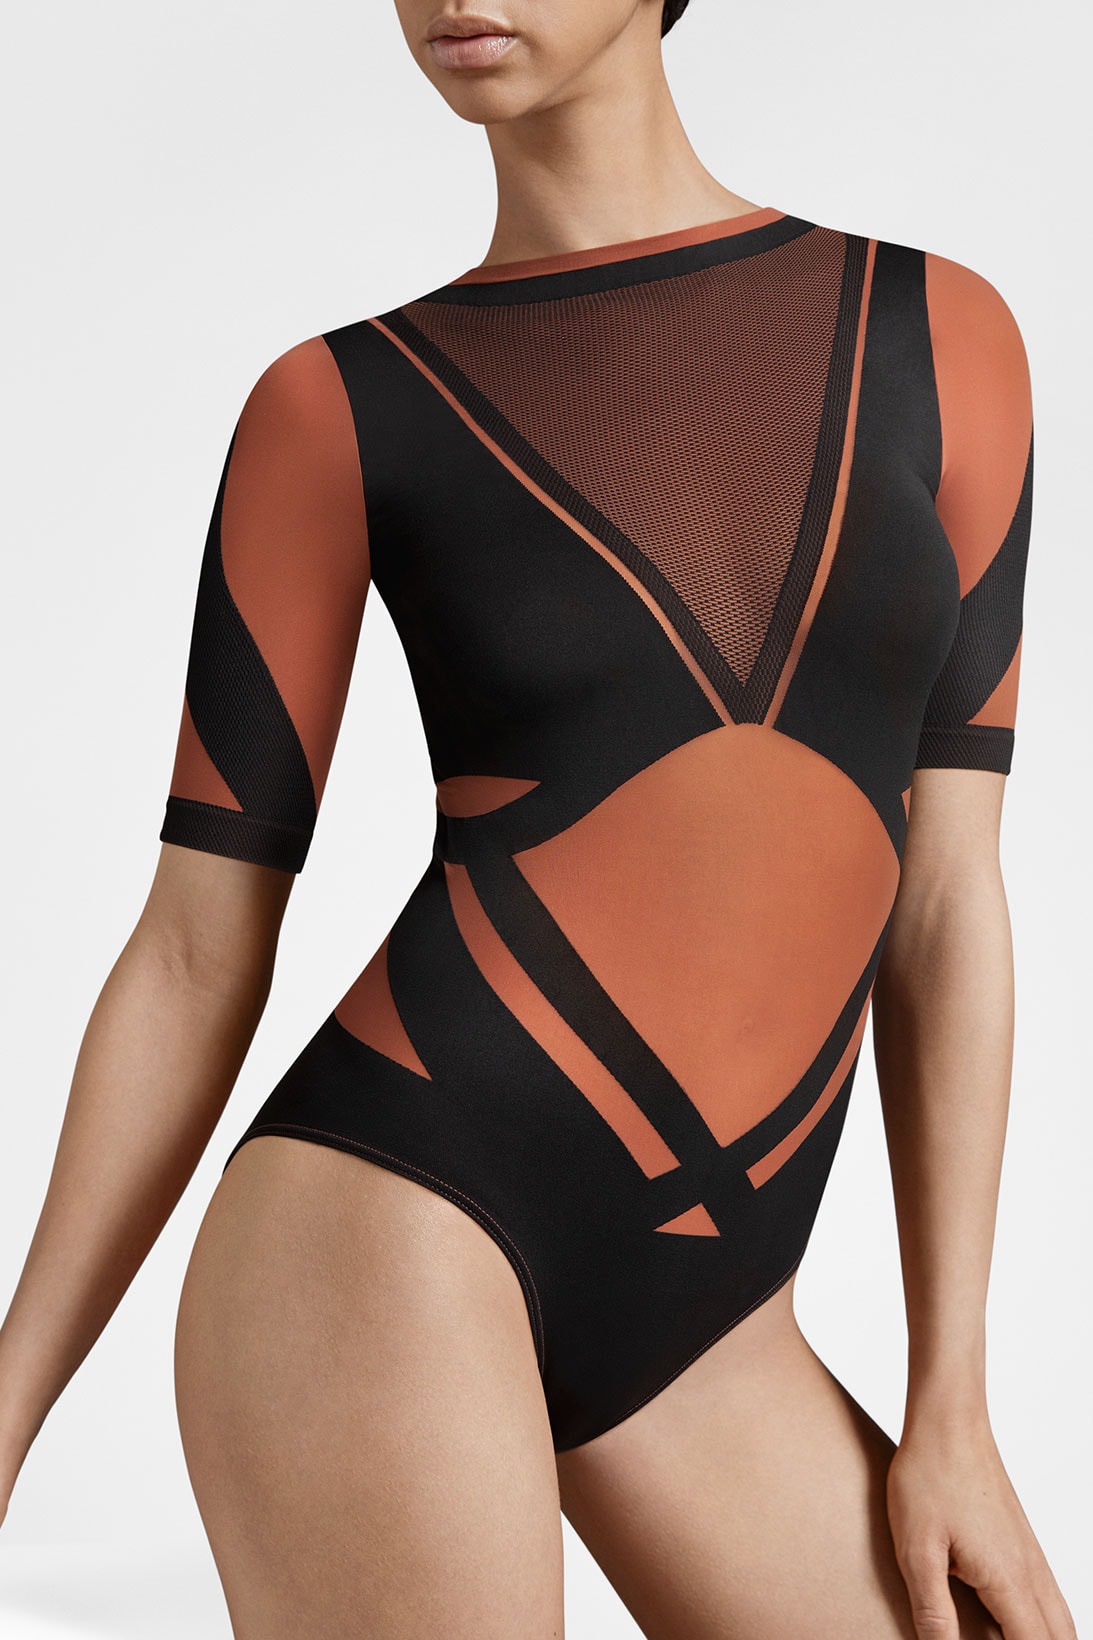 wolford adidas activewear performance collaboration seamless sheer motion orange bodysuit